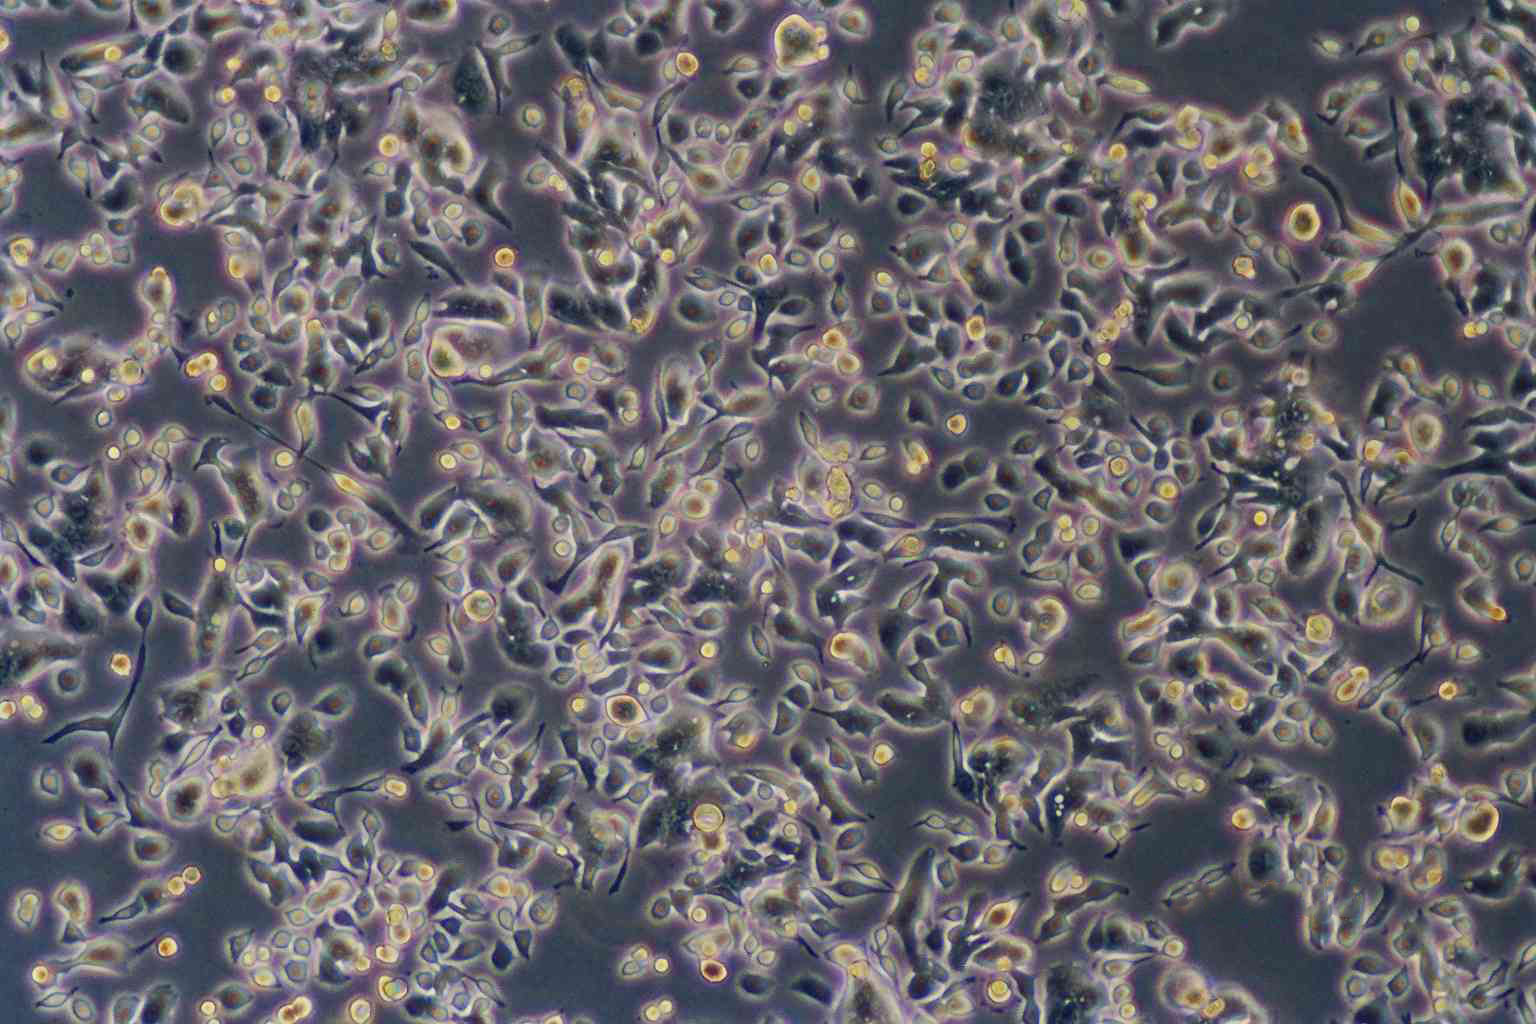 C32 [Human melanoma] Cells(赠送Str鉴定报告)|人黑色素瘤细胞